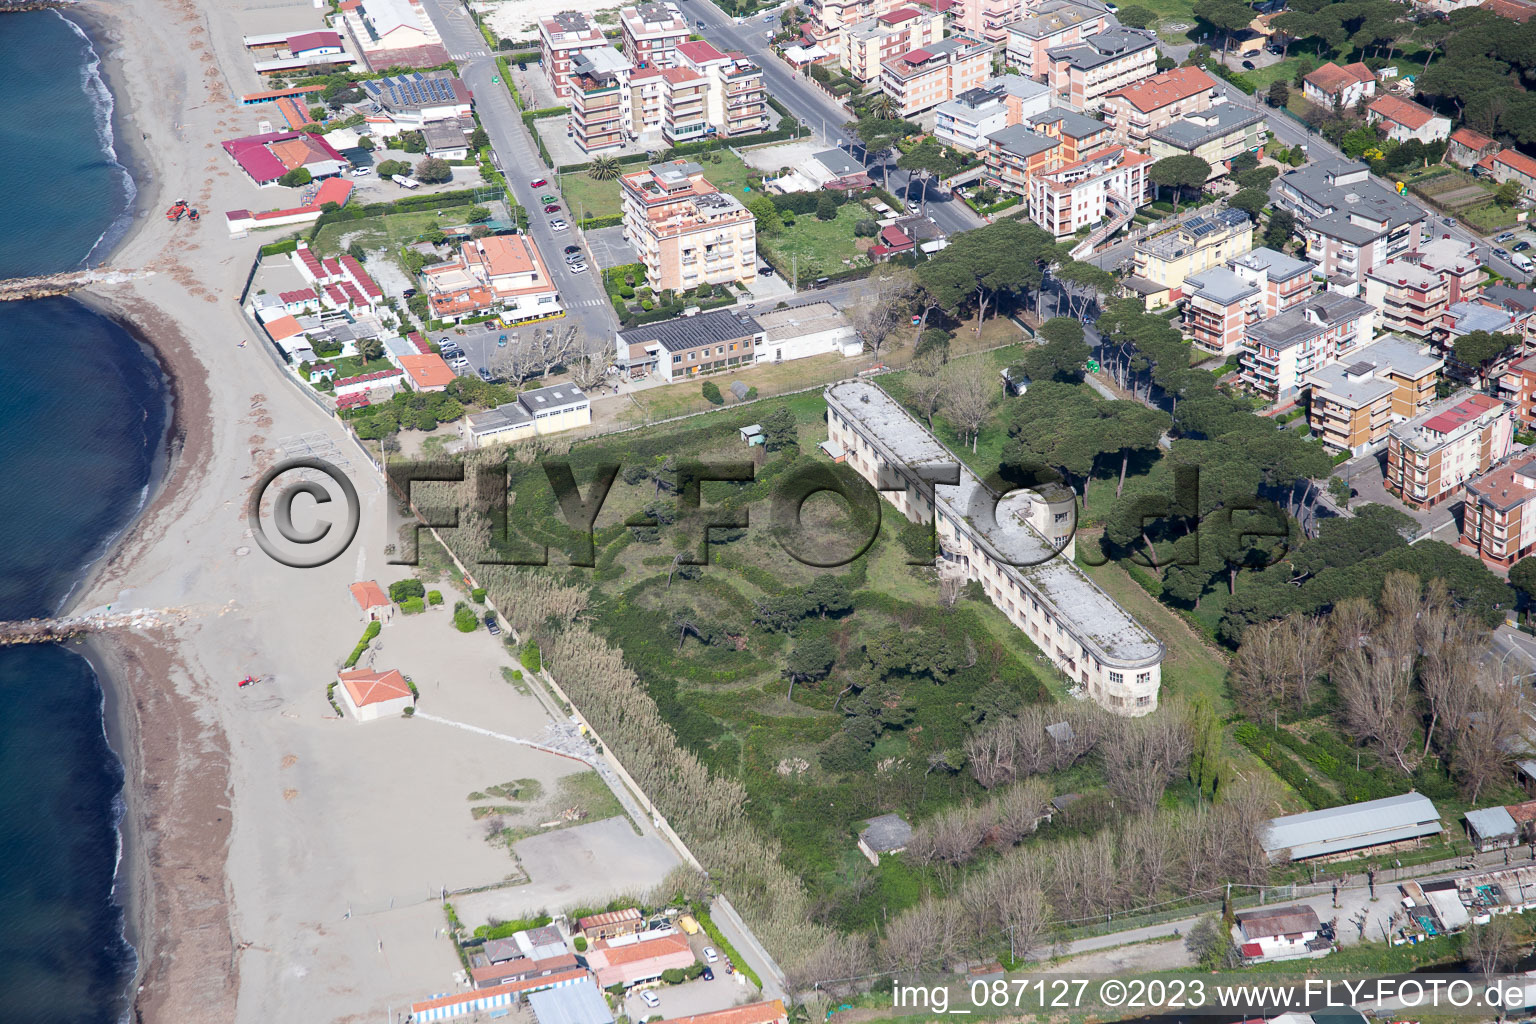 Luftbild von Marinella di Sarzana im Bundesland Liguria, Italien